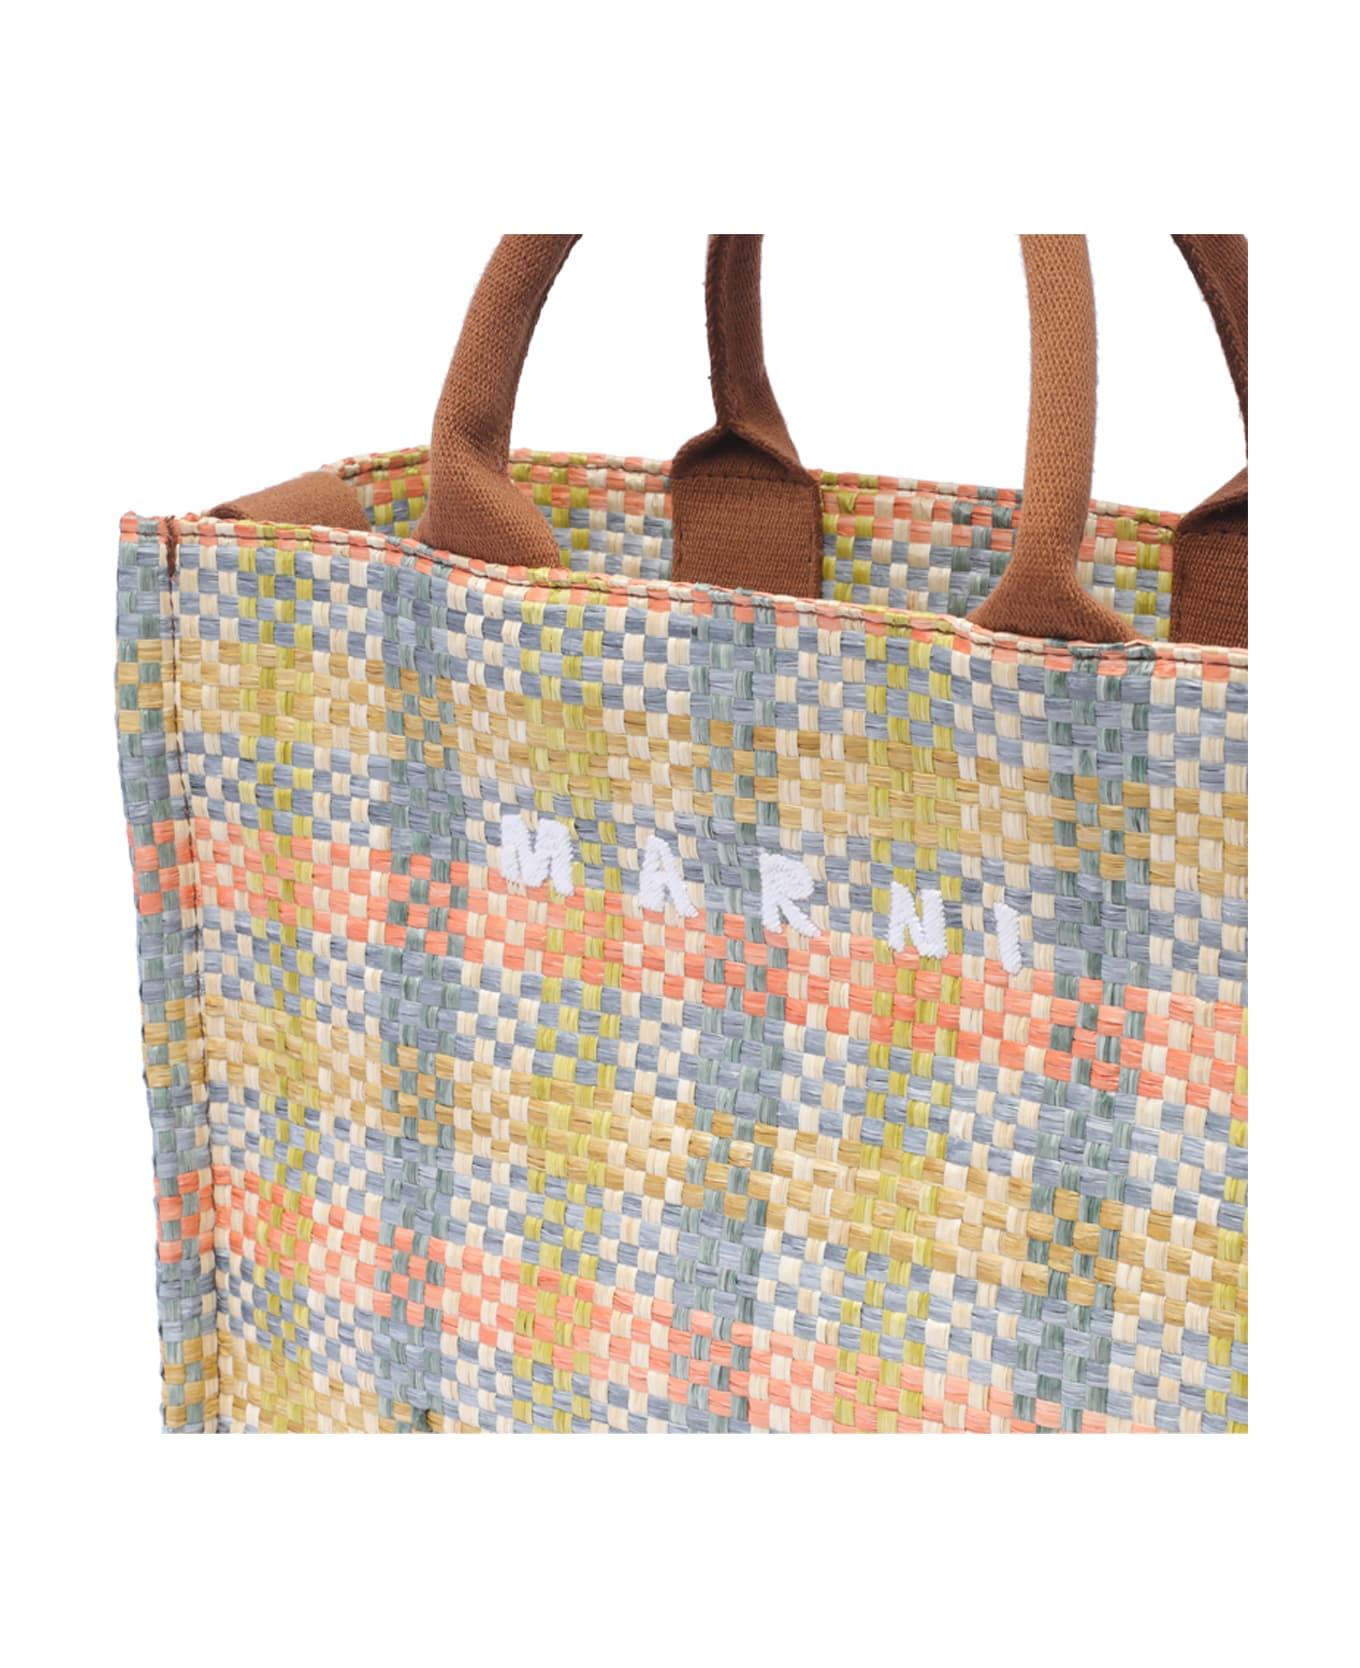 Marni Small Basket Bag Rafia Tissue - Lemon/apricot/moca ショルダーバッグ